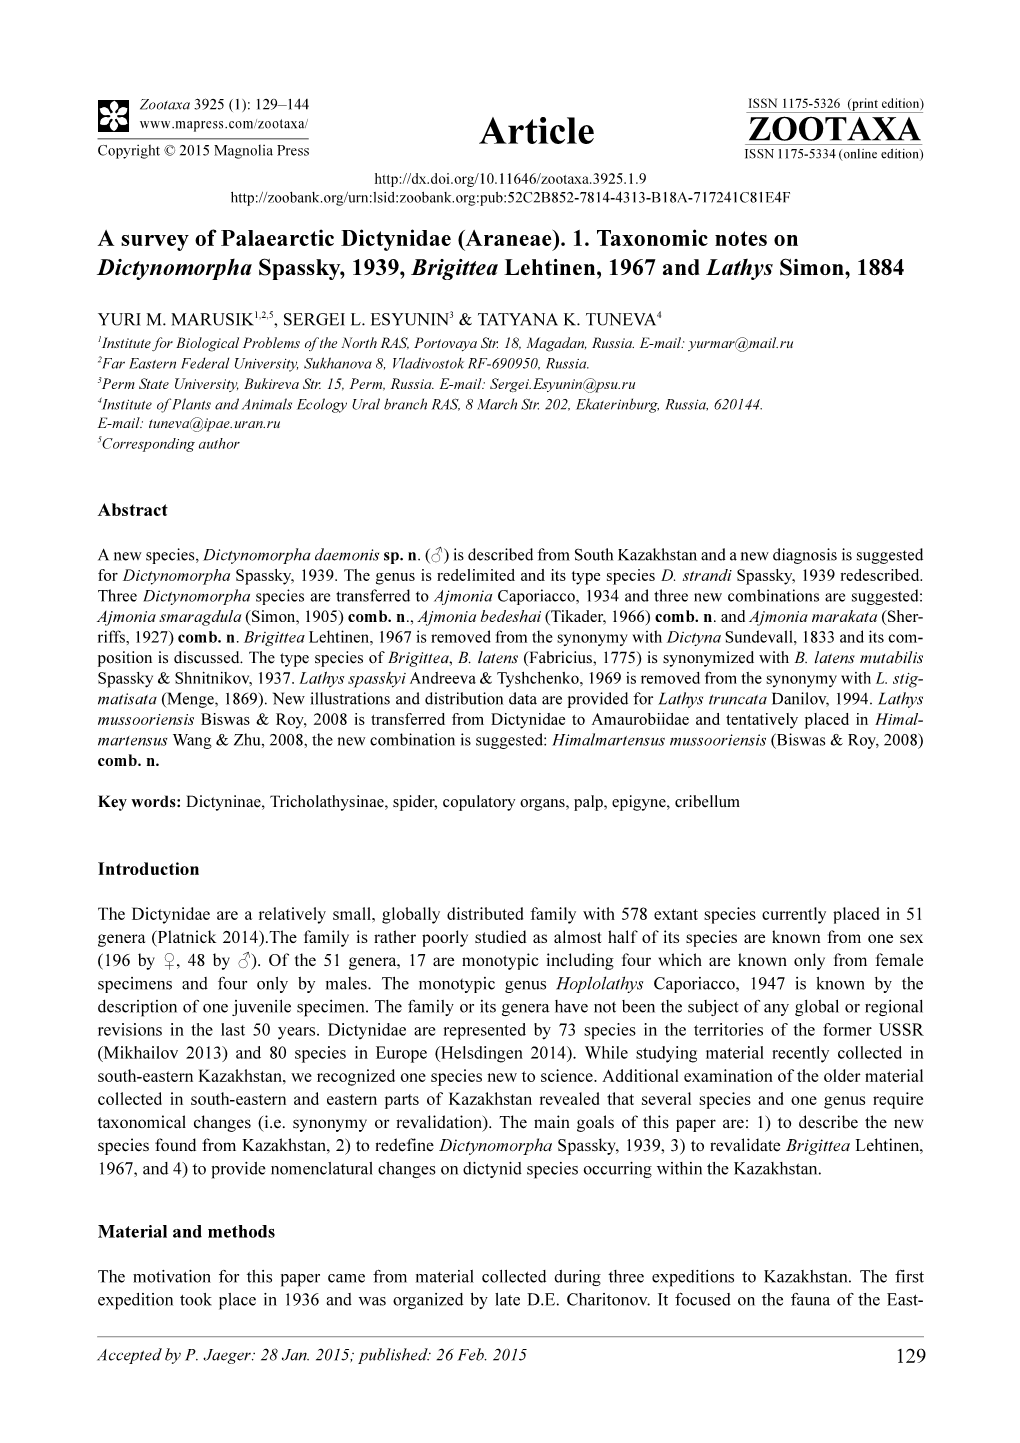 A Survey of Palaearctic Dictynidae (Araneae). 1. Taxonomic Notes on Dictynomorpha Spassky, 1939, Brigittea Lehtinen, 1967 and Lathys Simon, 1884